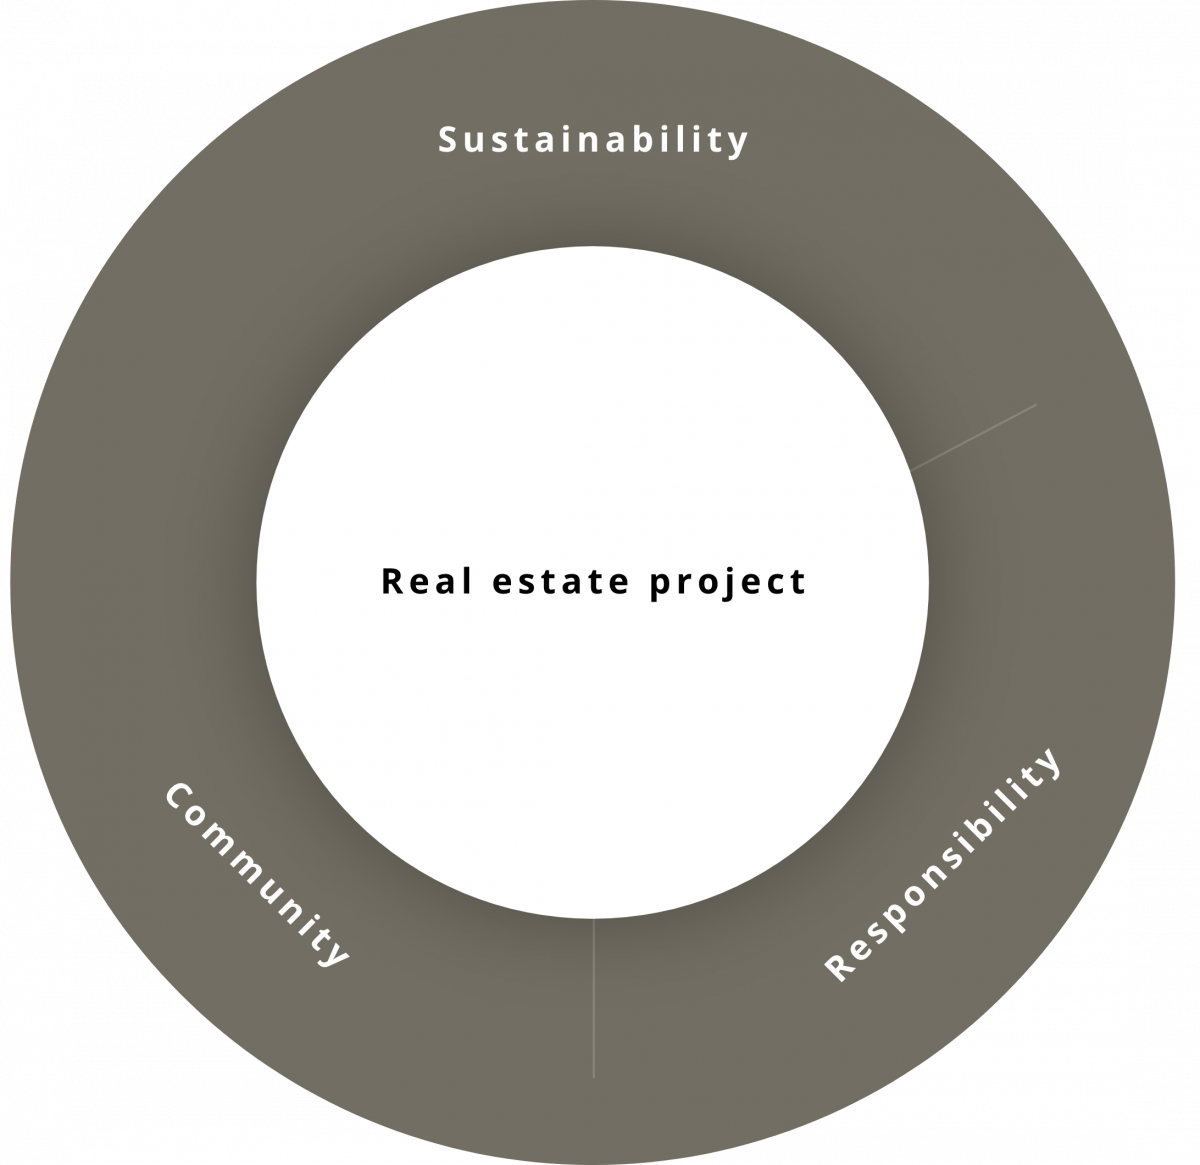 Sustainability: The Circle